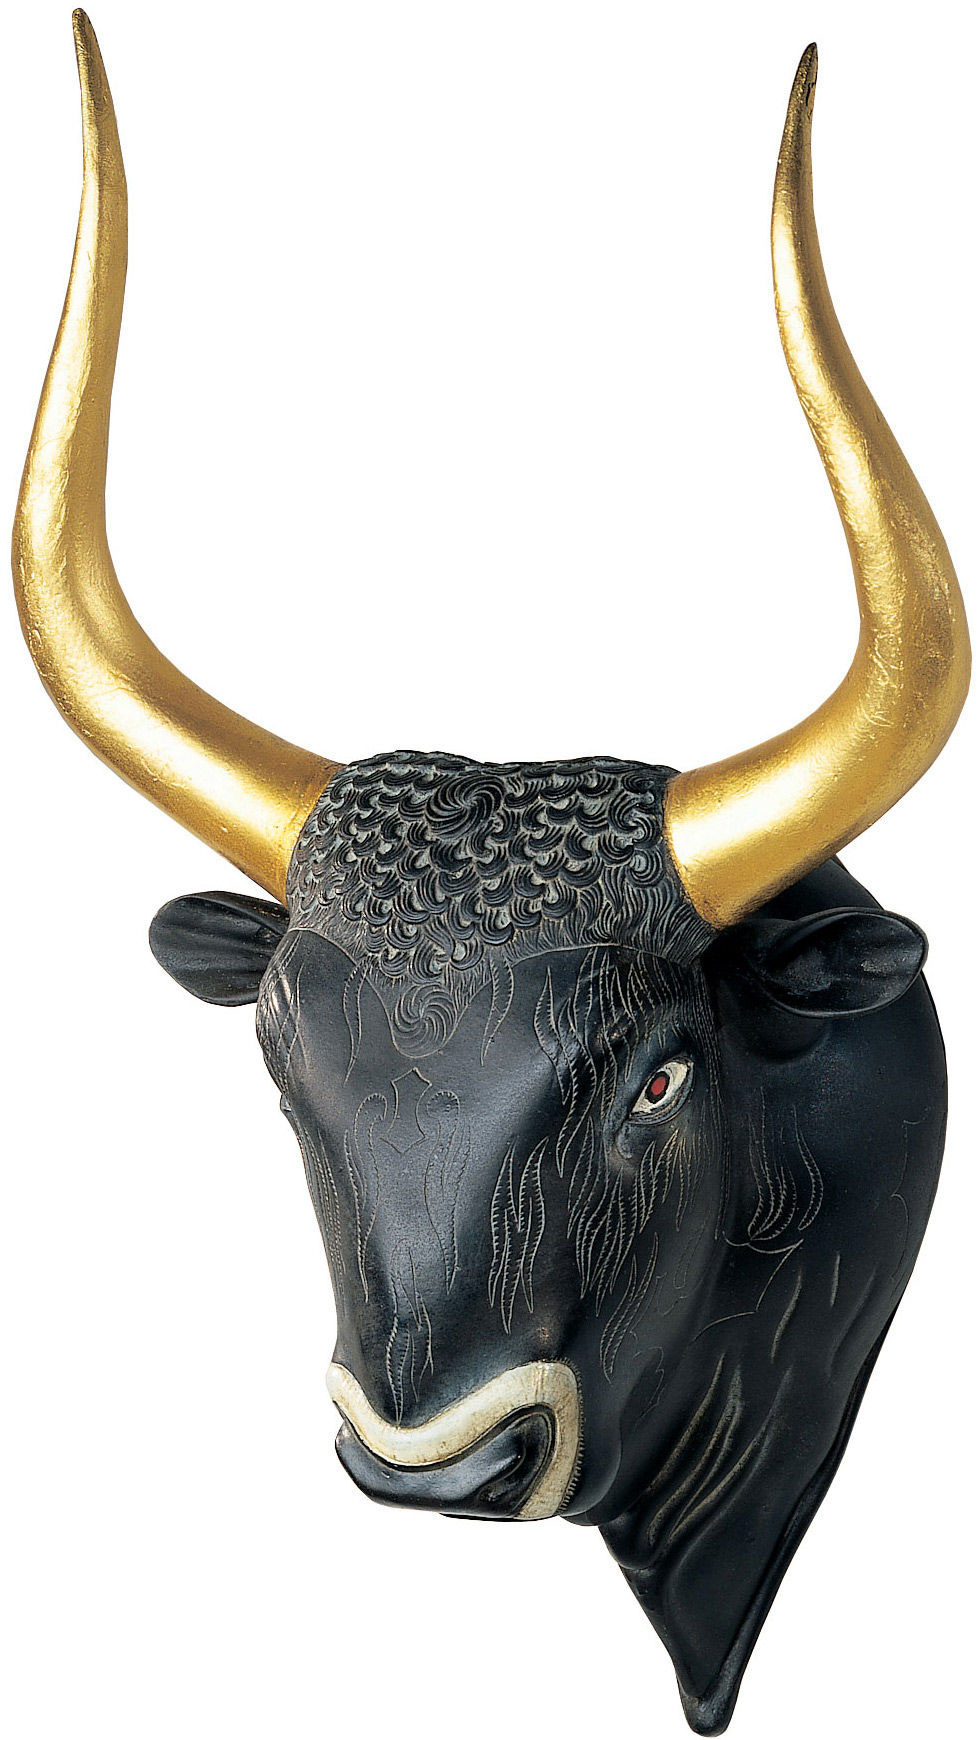 Minoan Bull’s Head from Knossos